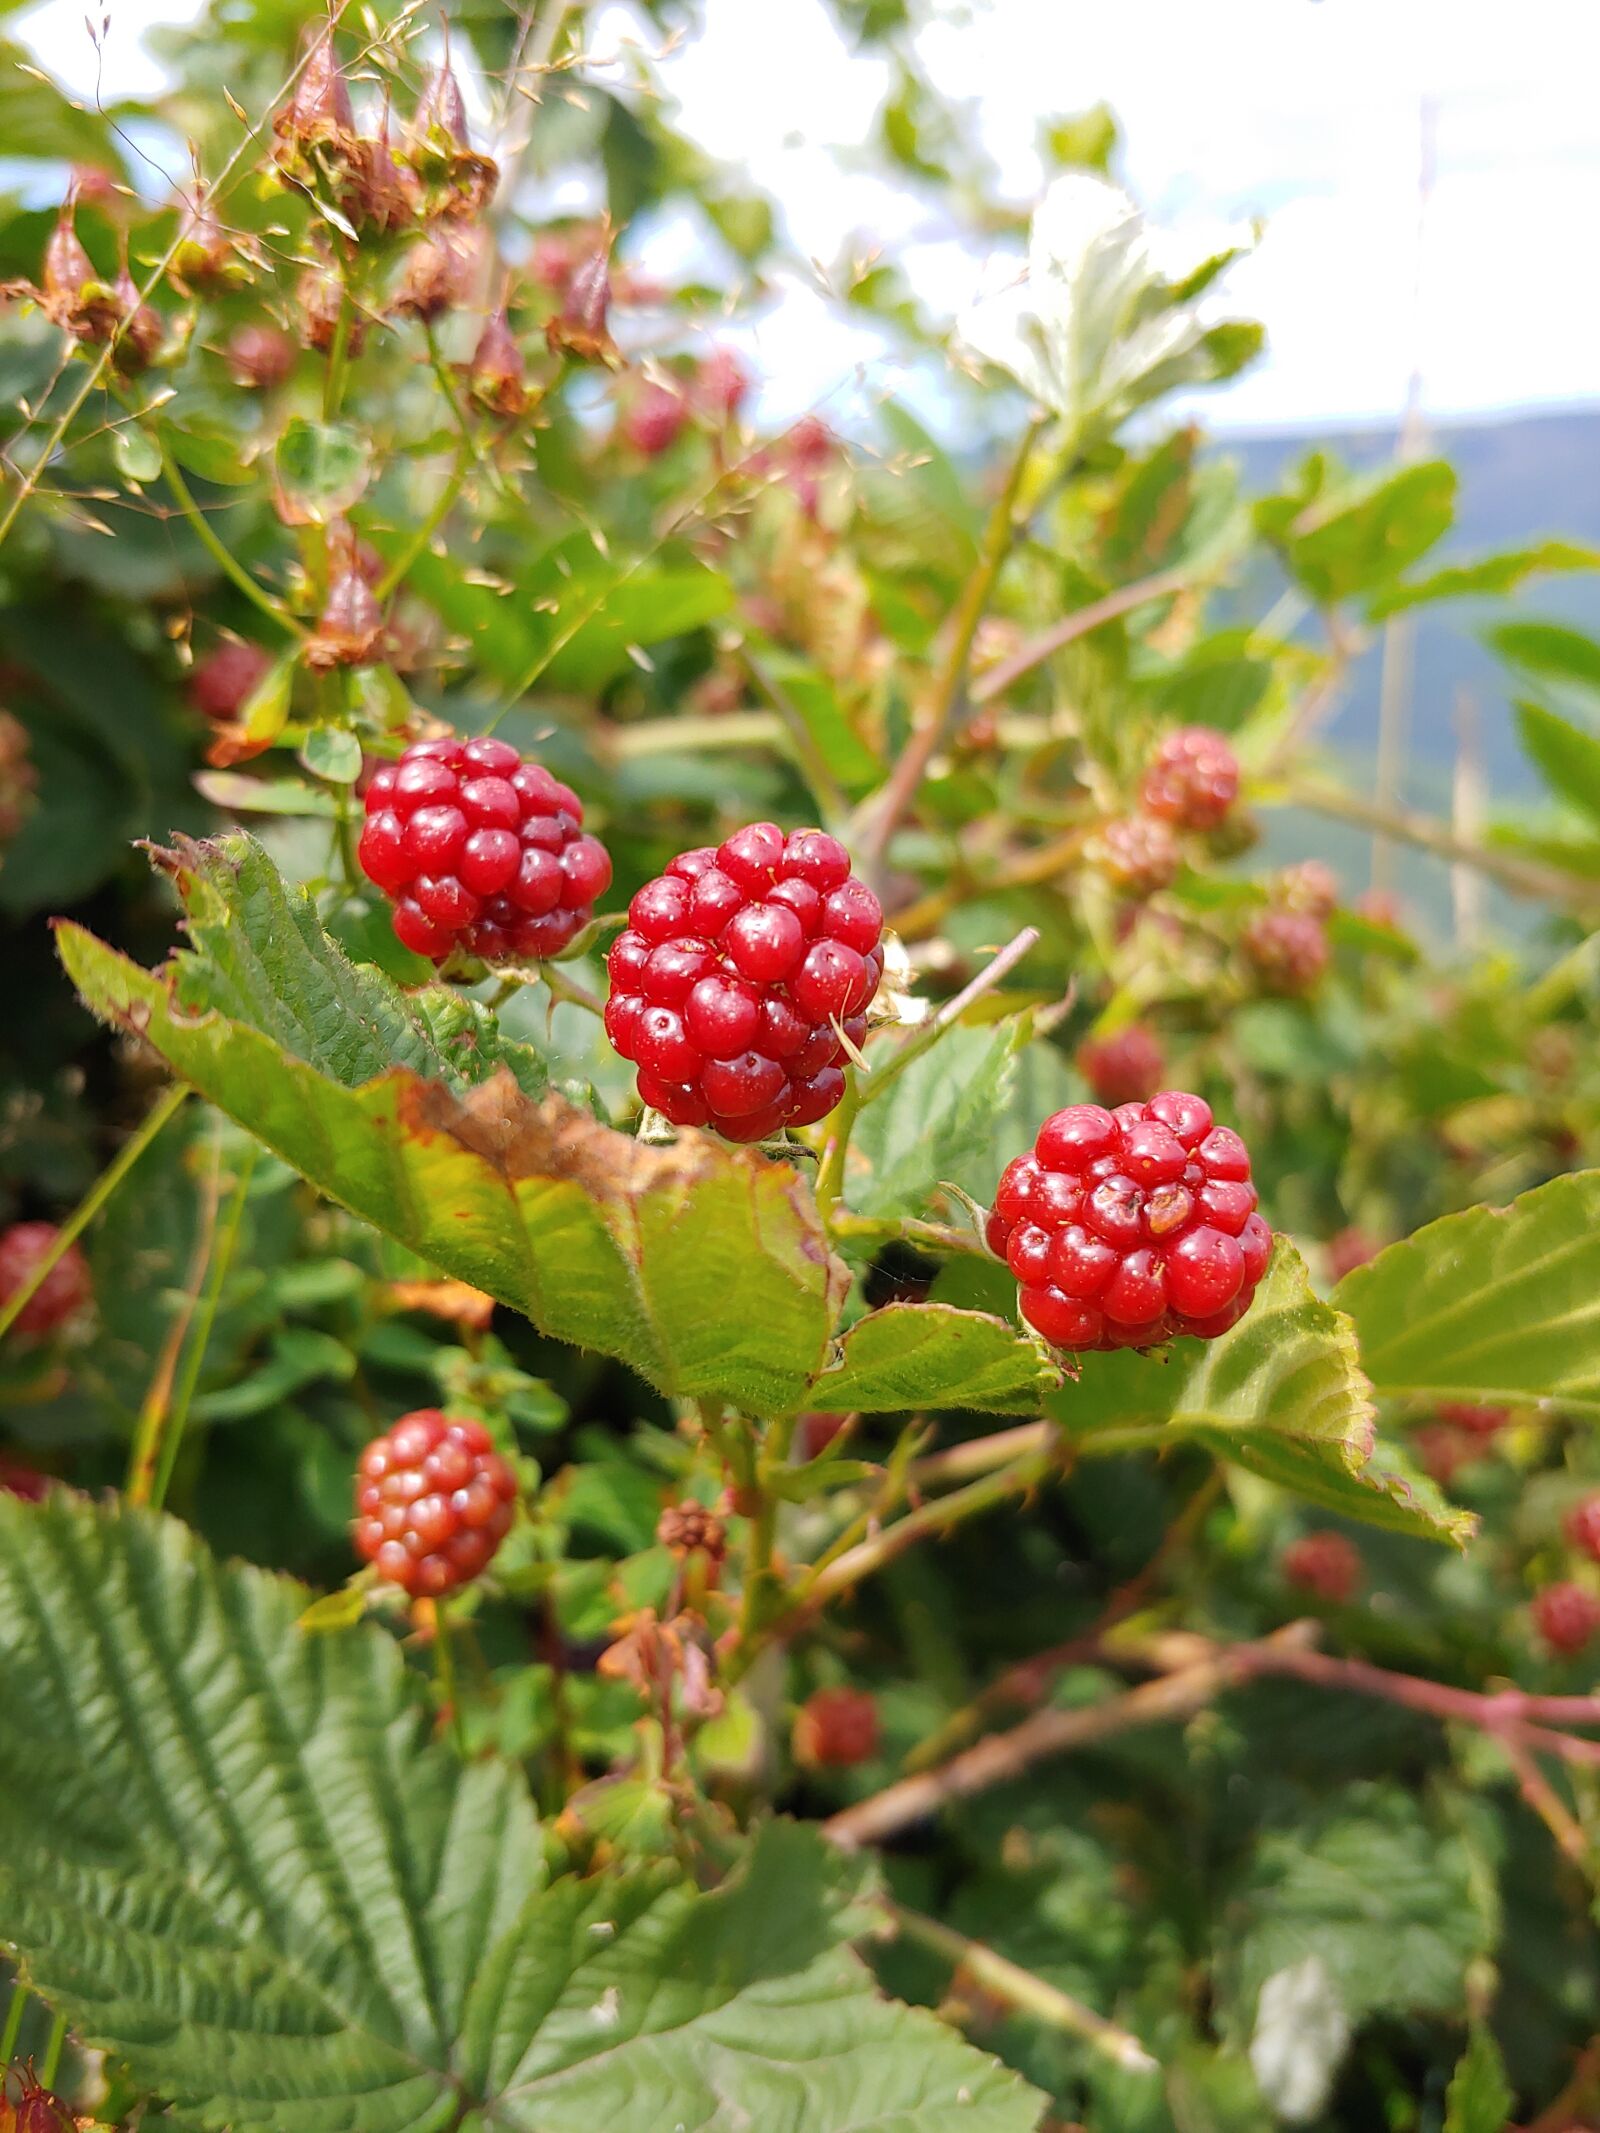 LG G7 THINQ sample photo. Blackberries, fruit, immature photography